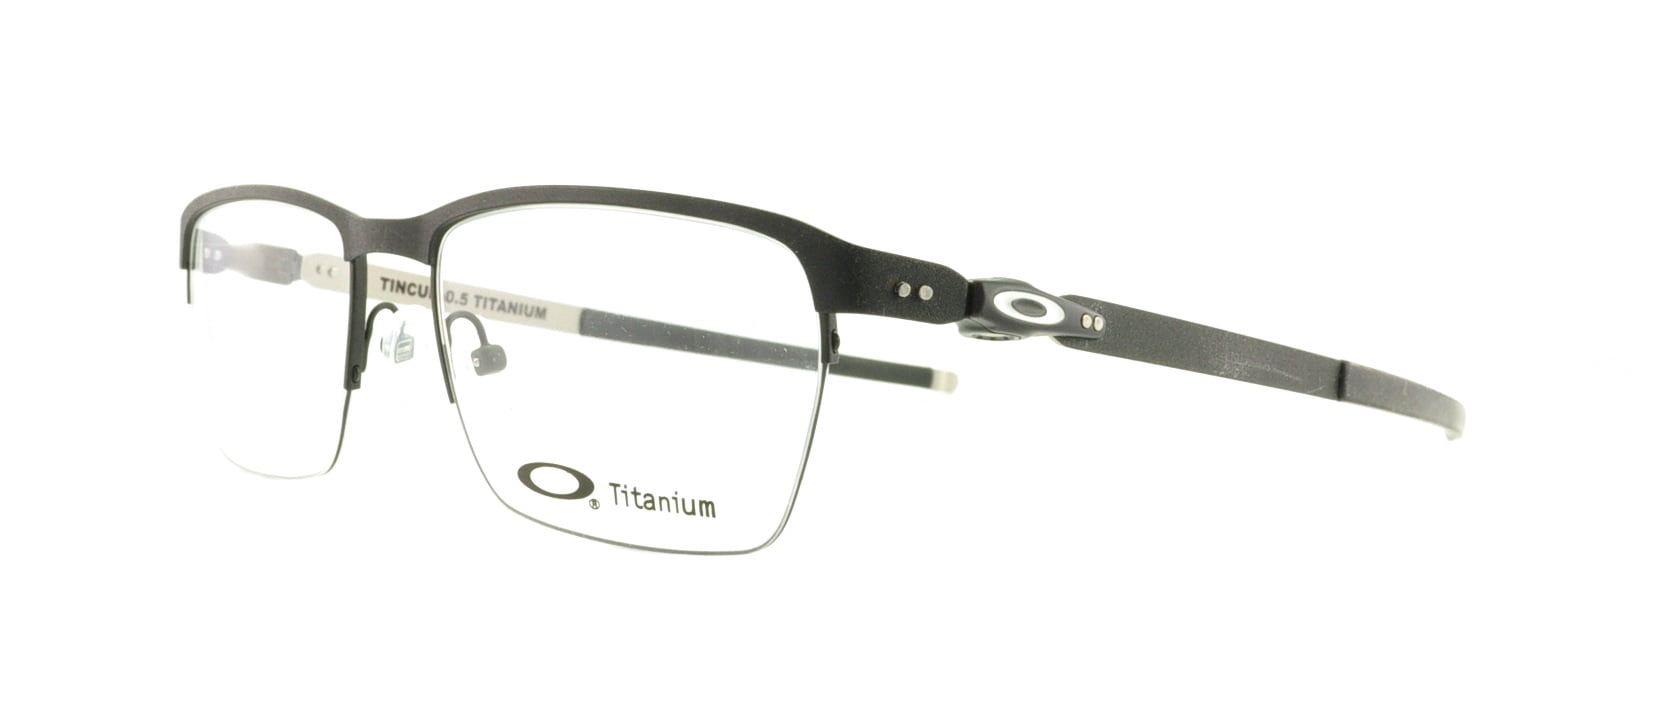 Oakley OX5099 Tincup 0.5 Titanium Semi 